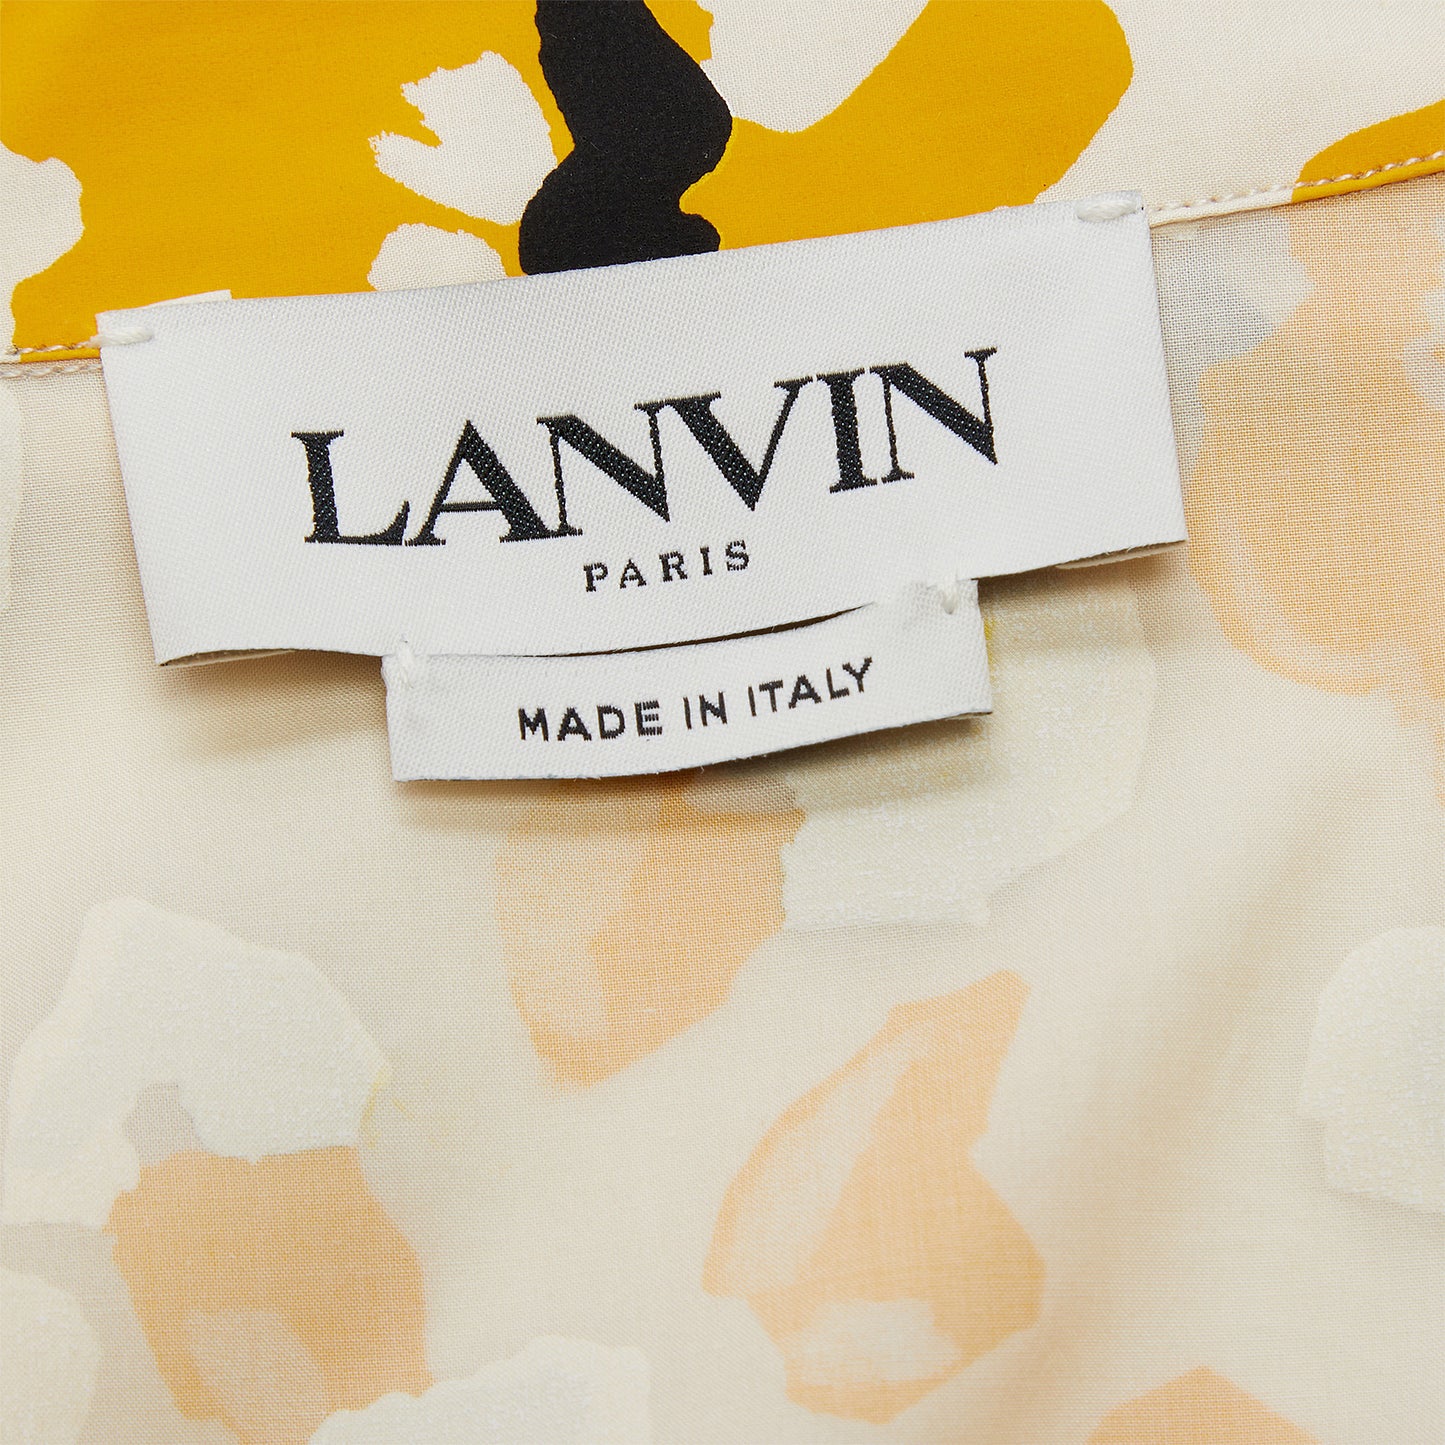 Lanvin Printed Bowling Shirt (Ecru/Black)